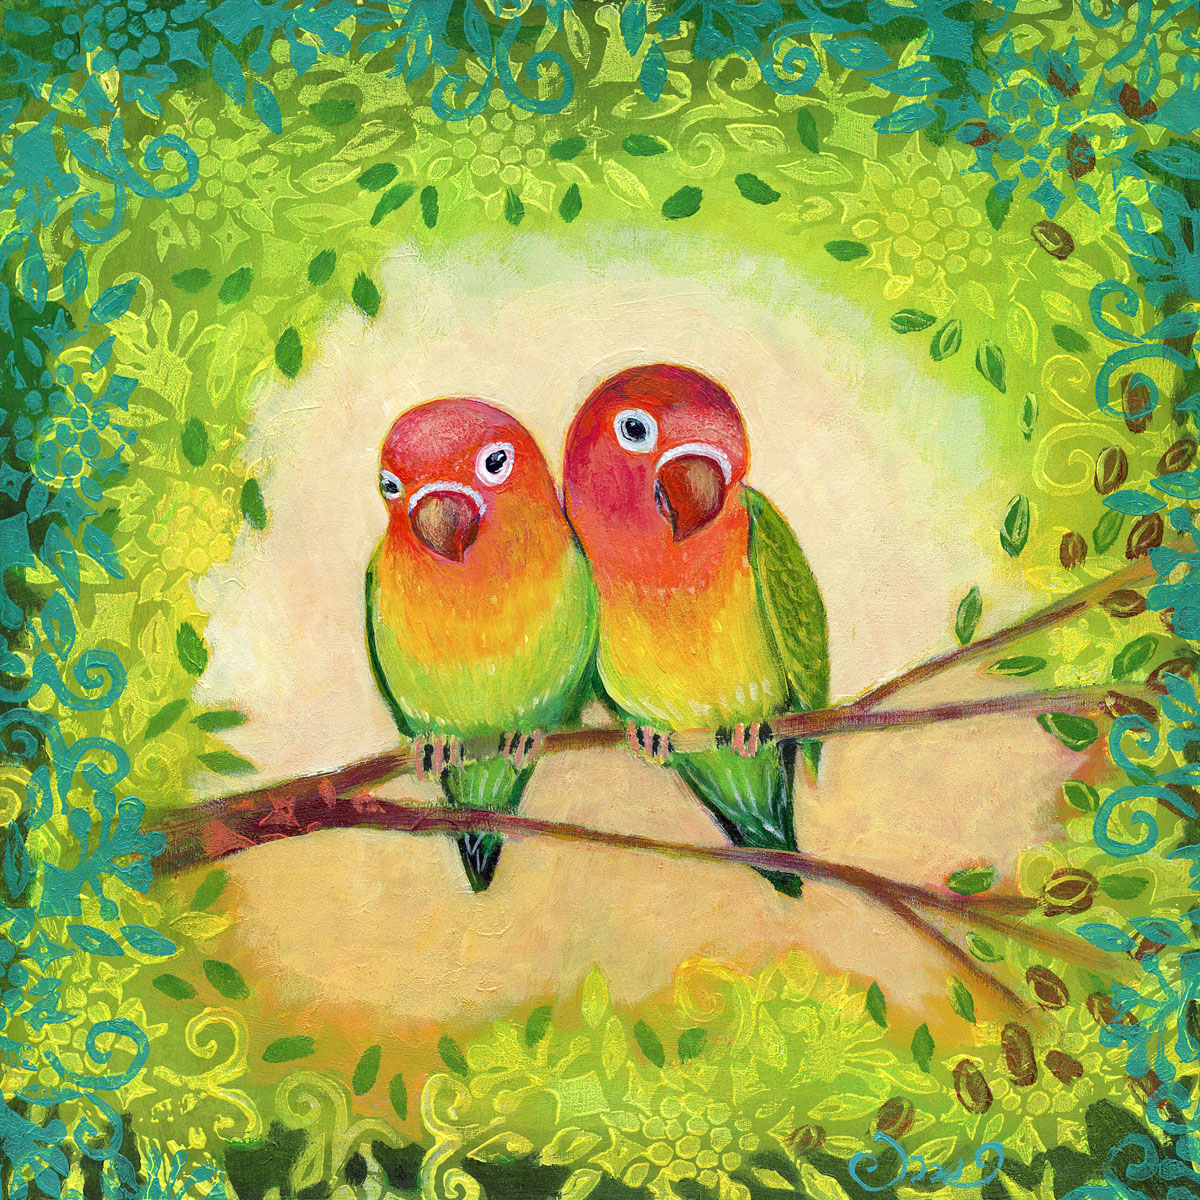 Painting Birds in Watercolor Watercolor Mastery Workshop